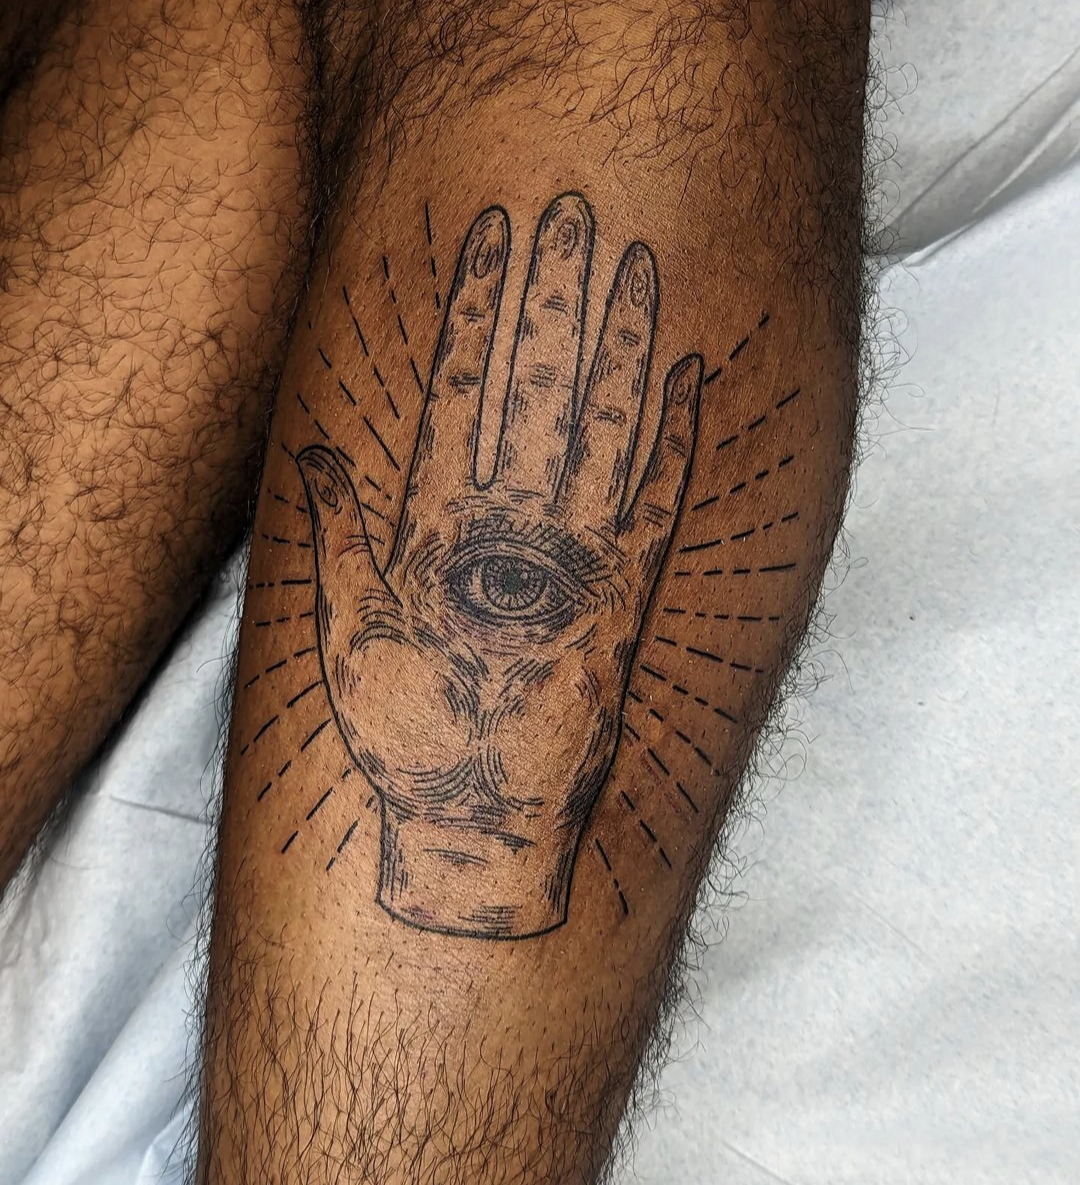 Hand Tattoo - Manhattan, NY - Studio 28 Tattoo